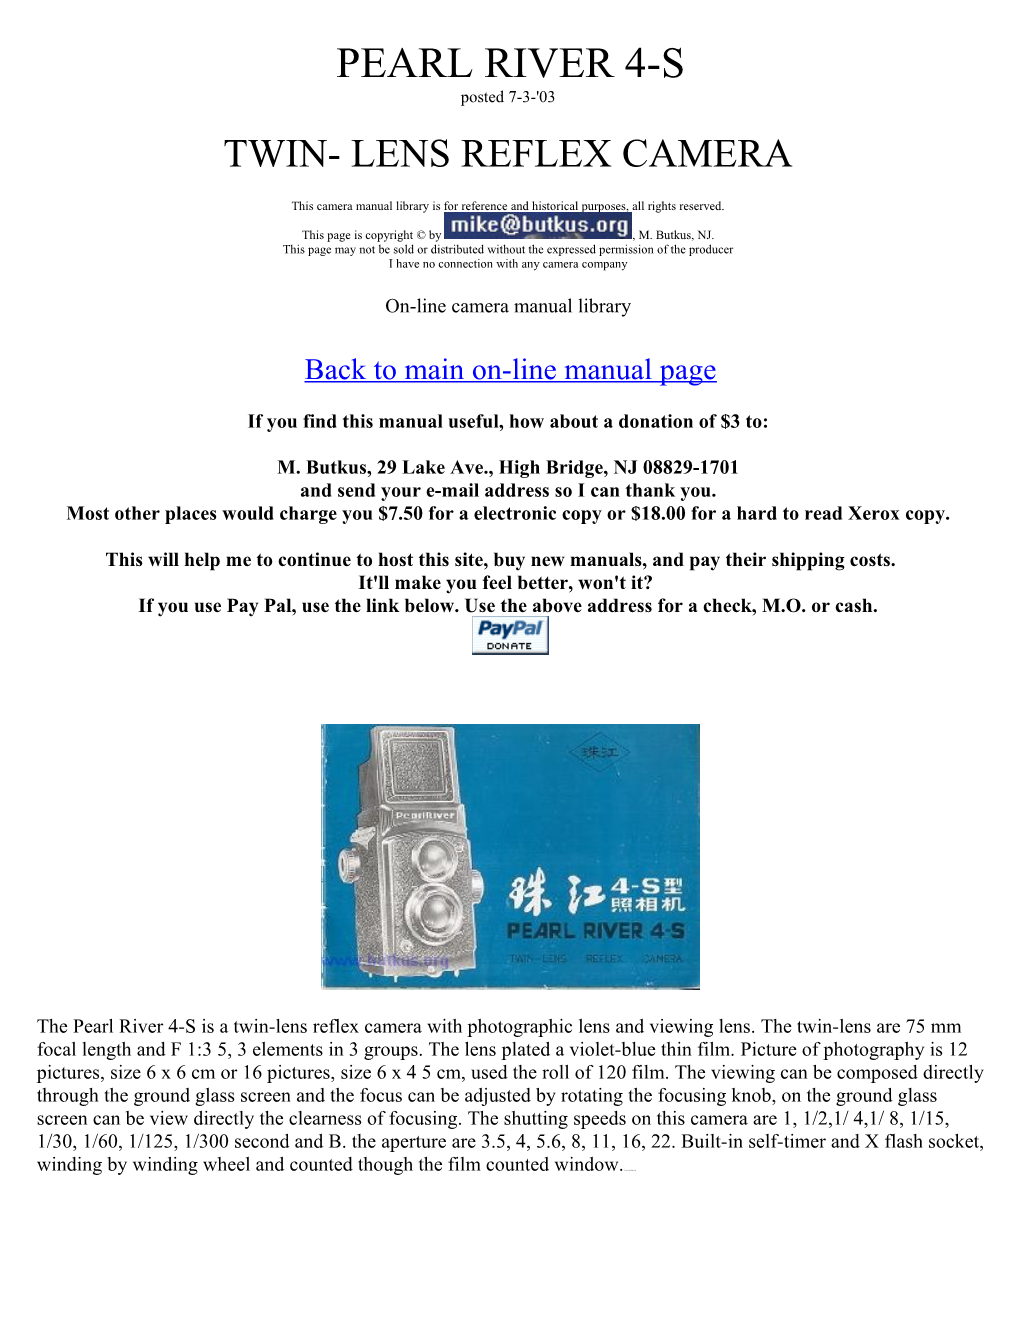 Twin- Lens Reflex Camera